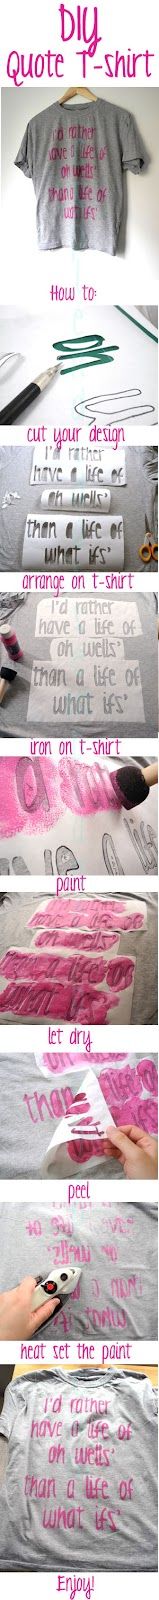 DIY Words on T-Shirt